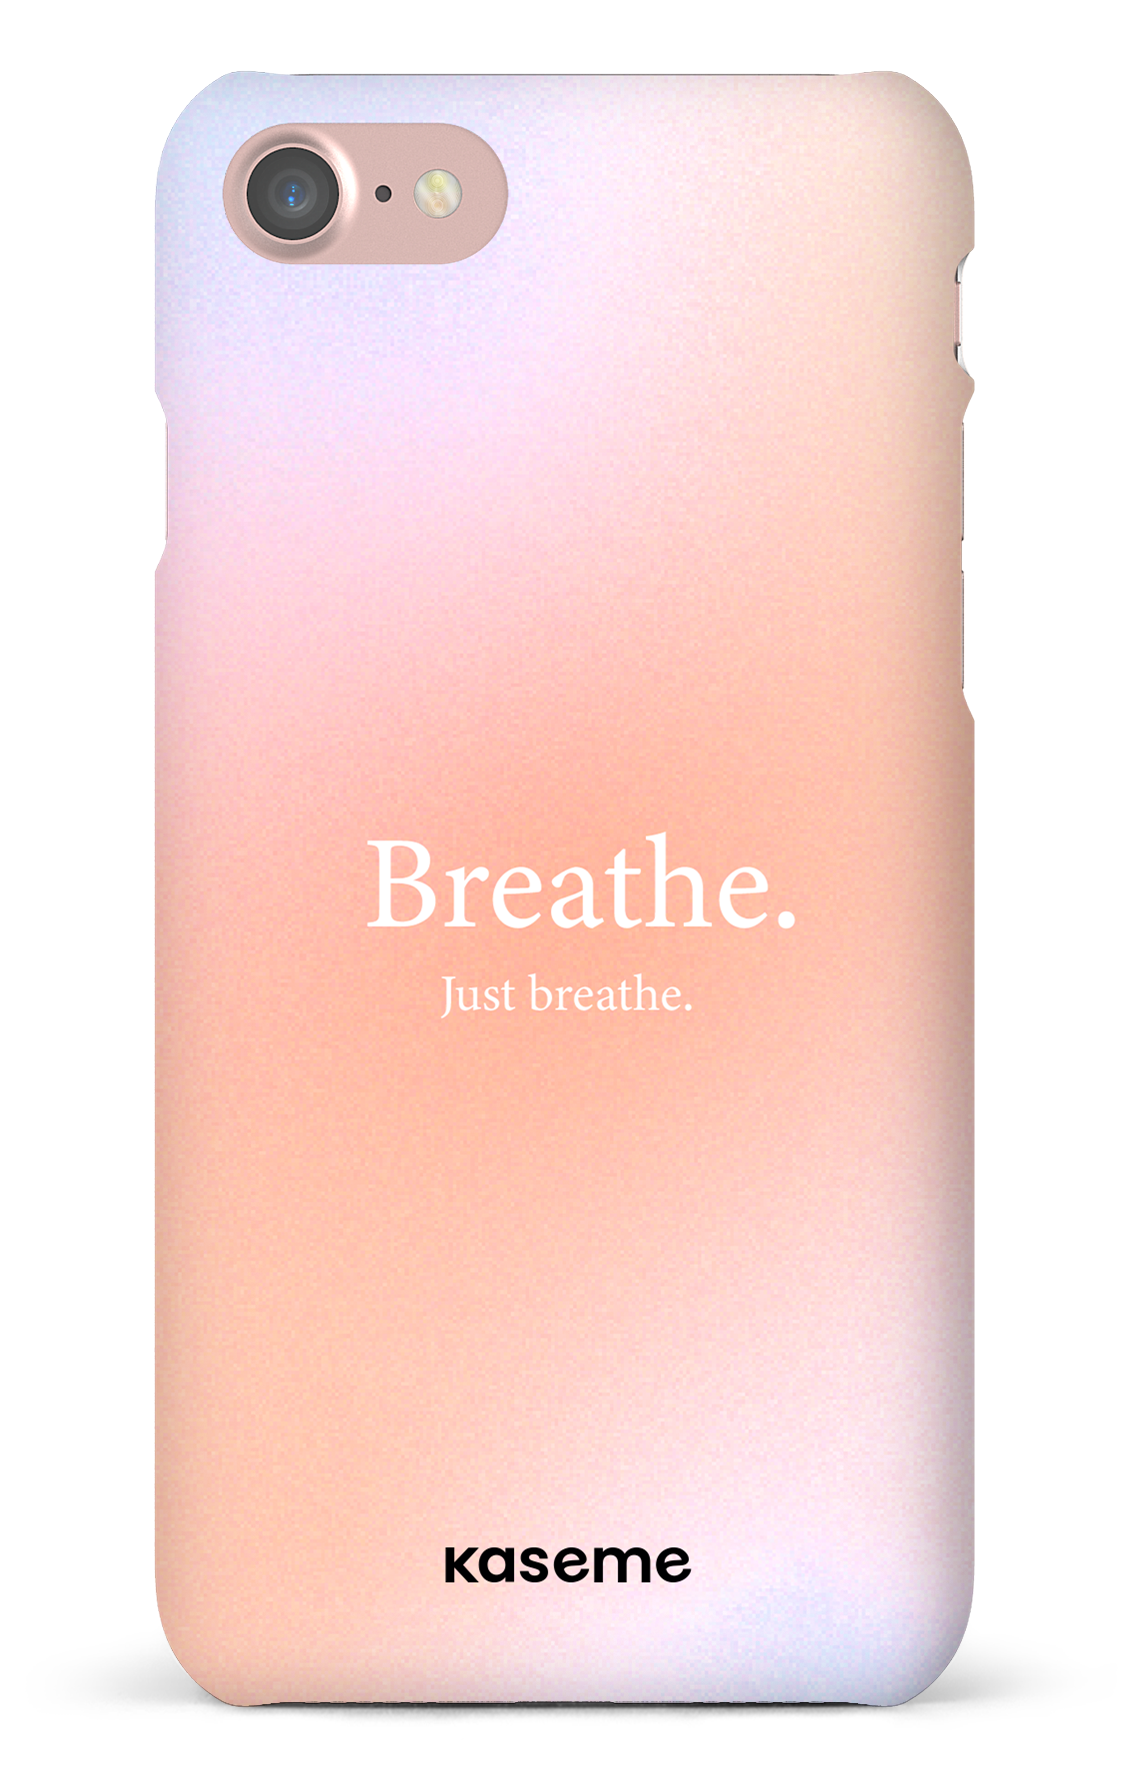 Just breathe - iPhone 7